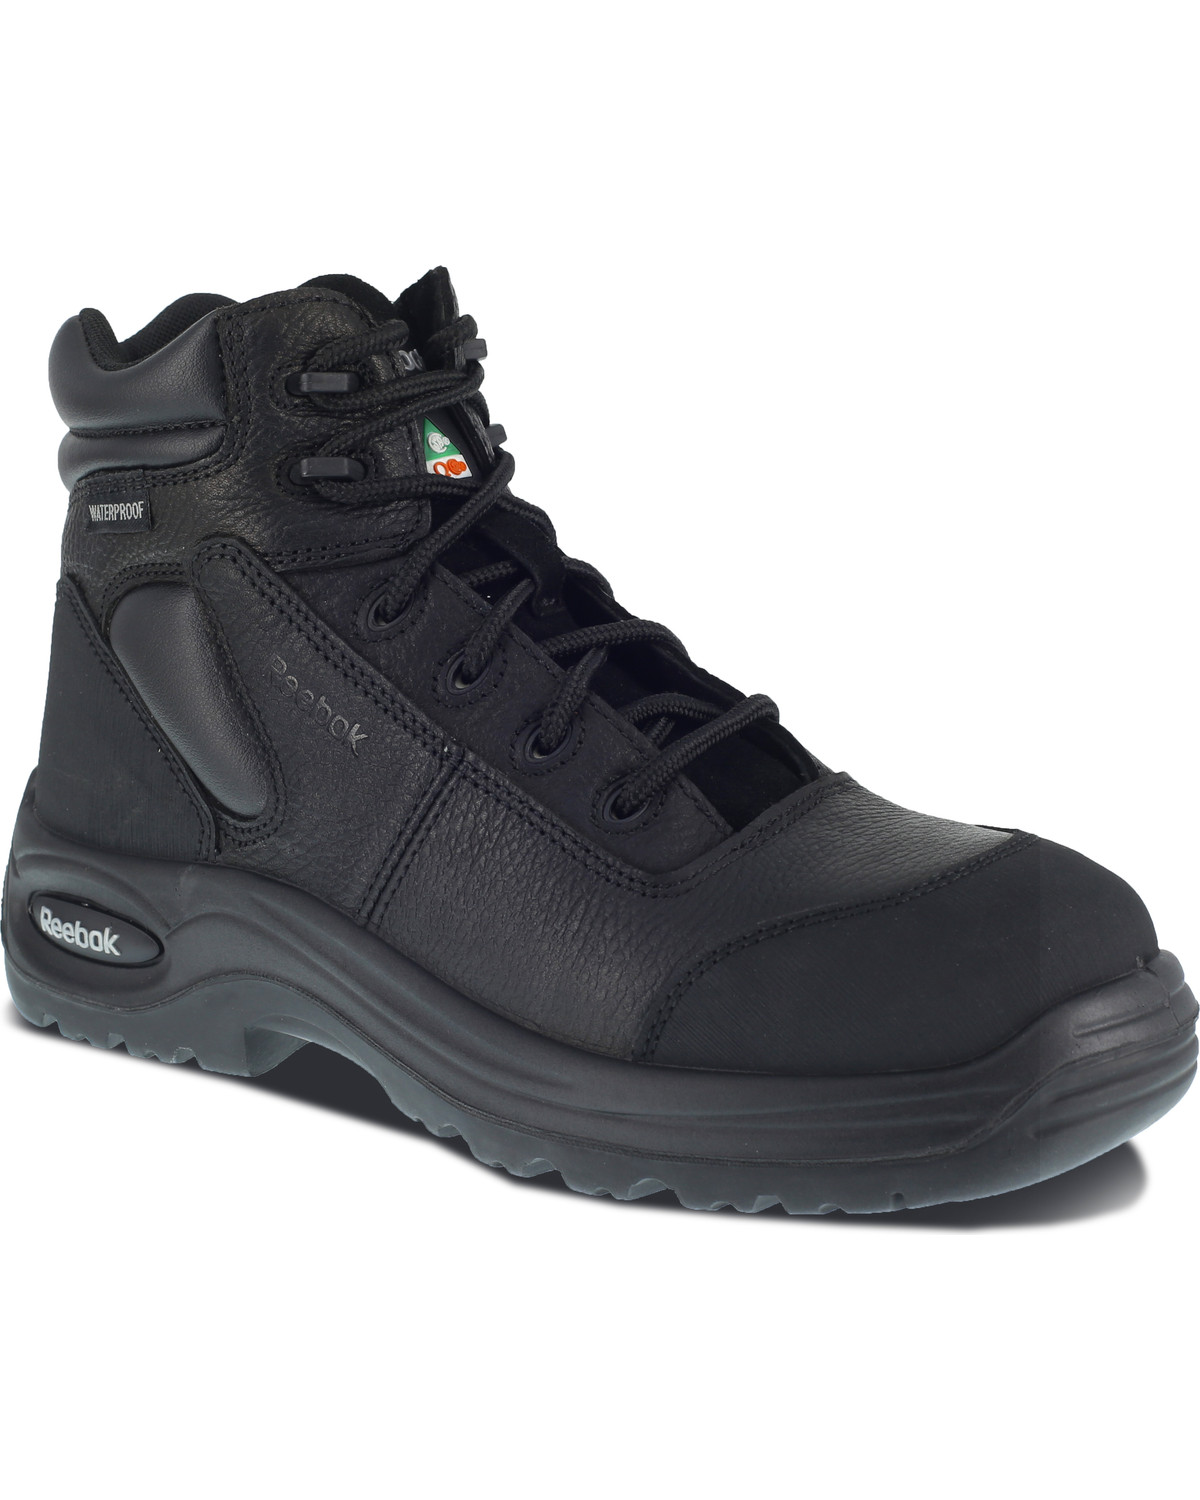 Reebok Men's Trainex 6" Lace-Up Waterproof Work Boots - Composite Toe